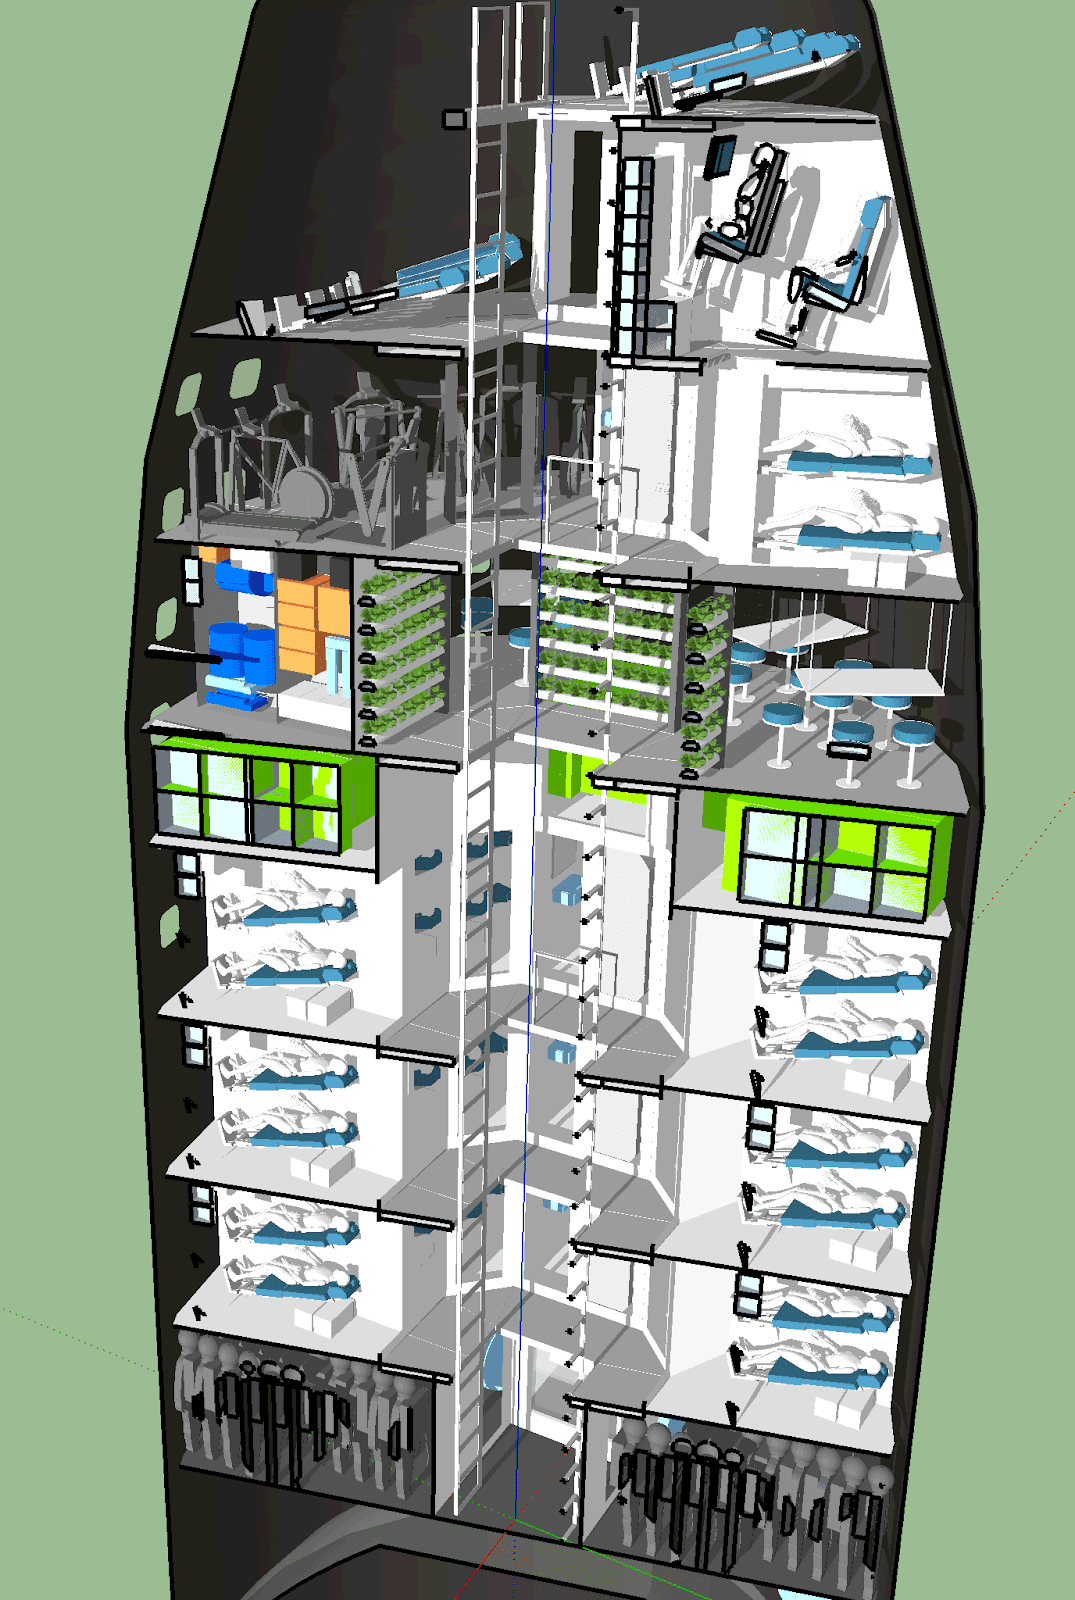 All Decks of SpaceX 100-passenger Starship interior concept by Joseph Lantz